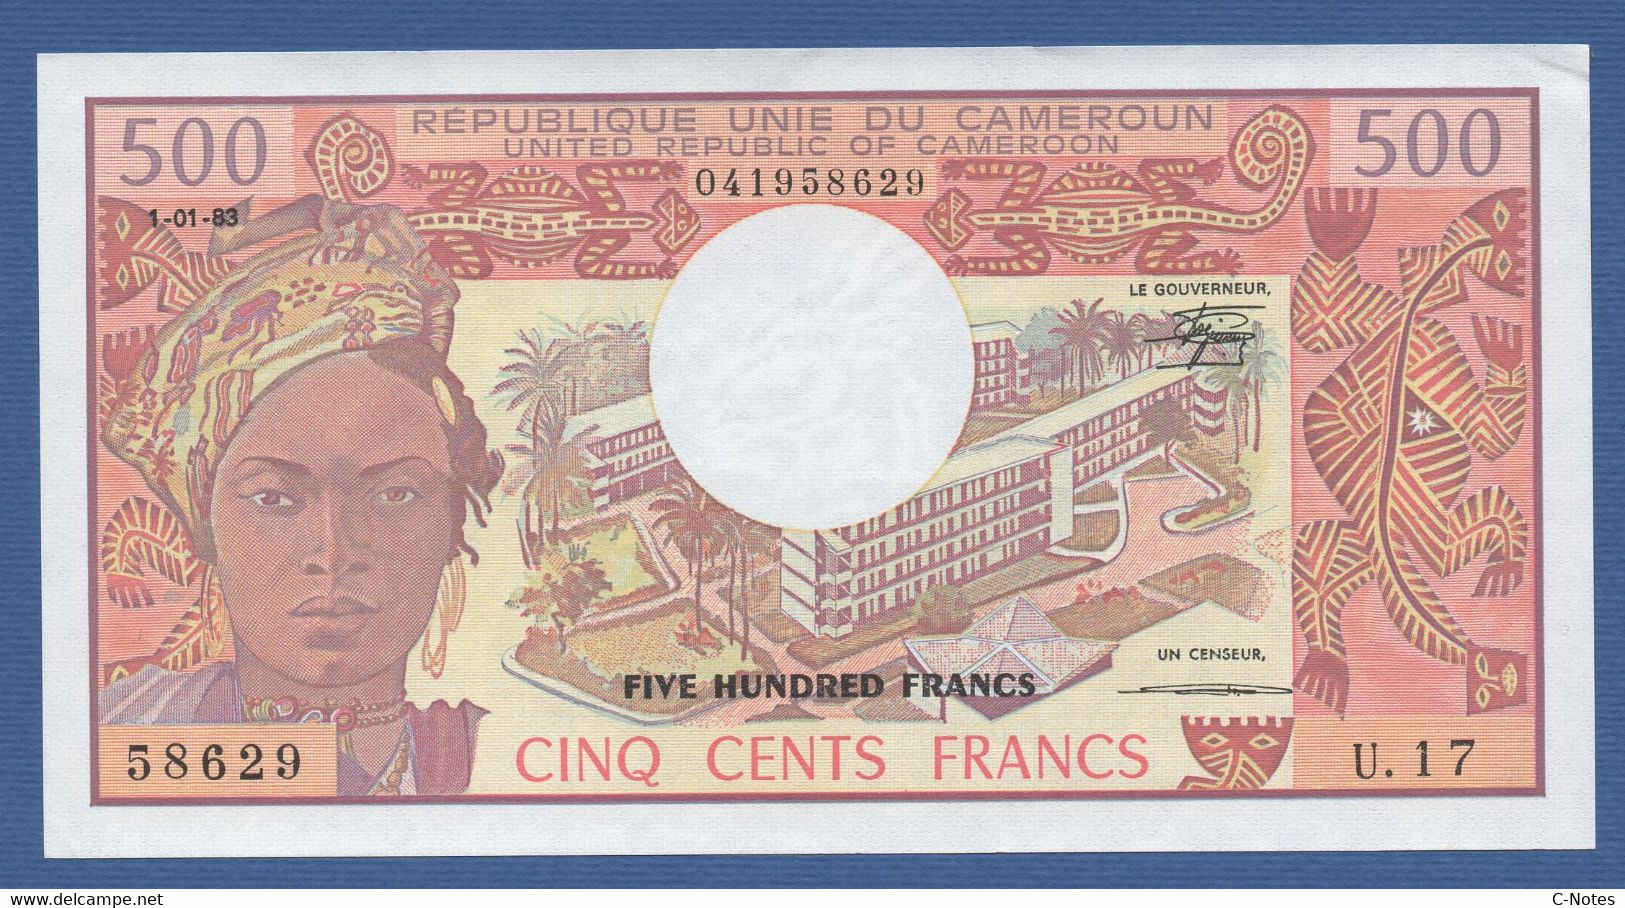 CAMEROON - P.15d – 500 Francs 01.01.1983 AUNC Serie U.17 58629 - Cameroun